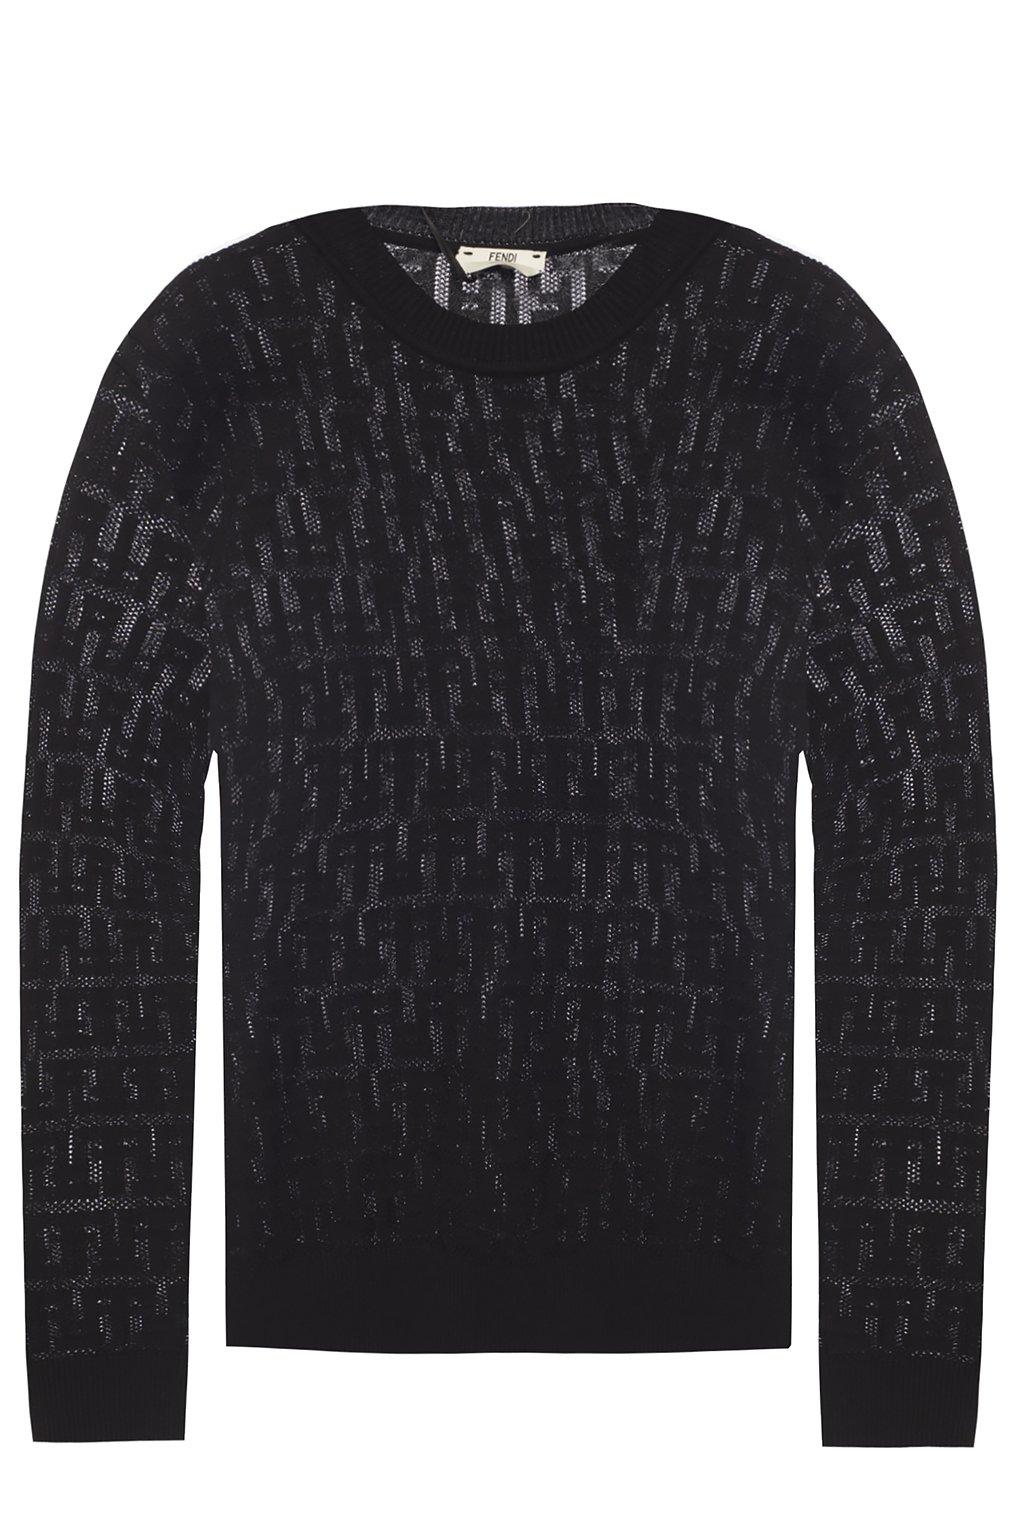 Fendi Ff Motif Sweater in Black - Lyst